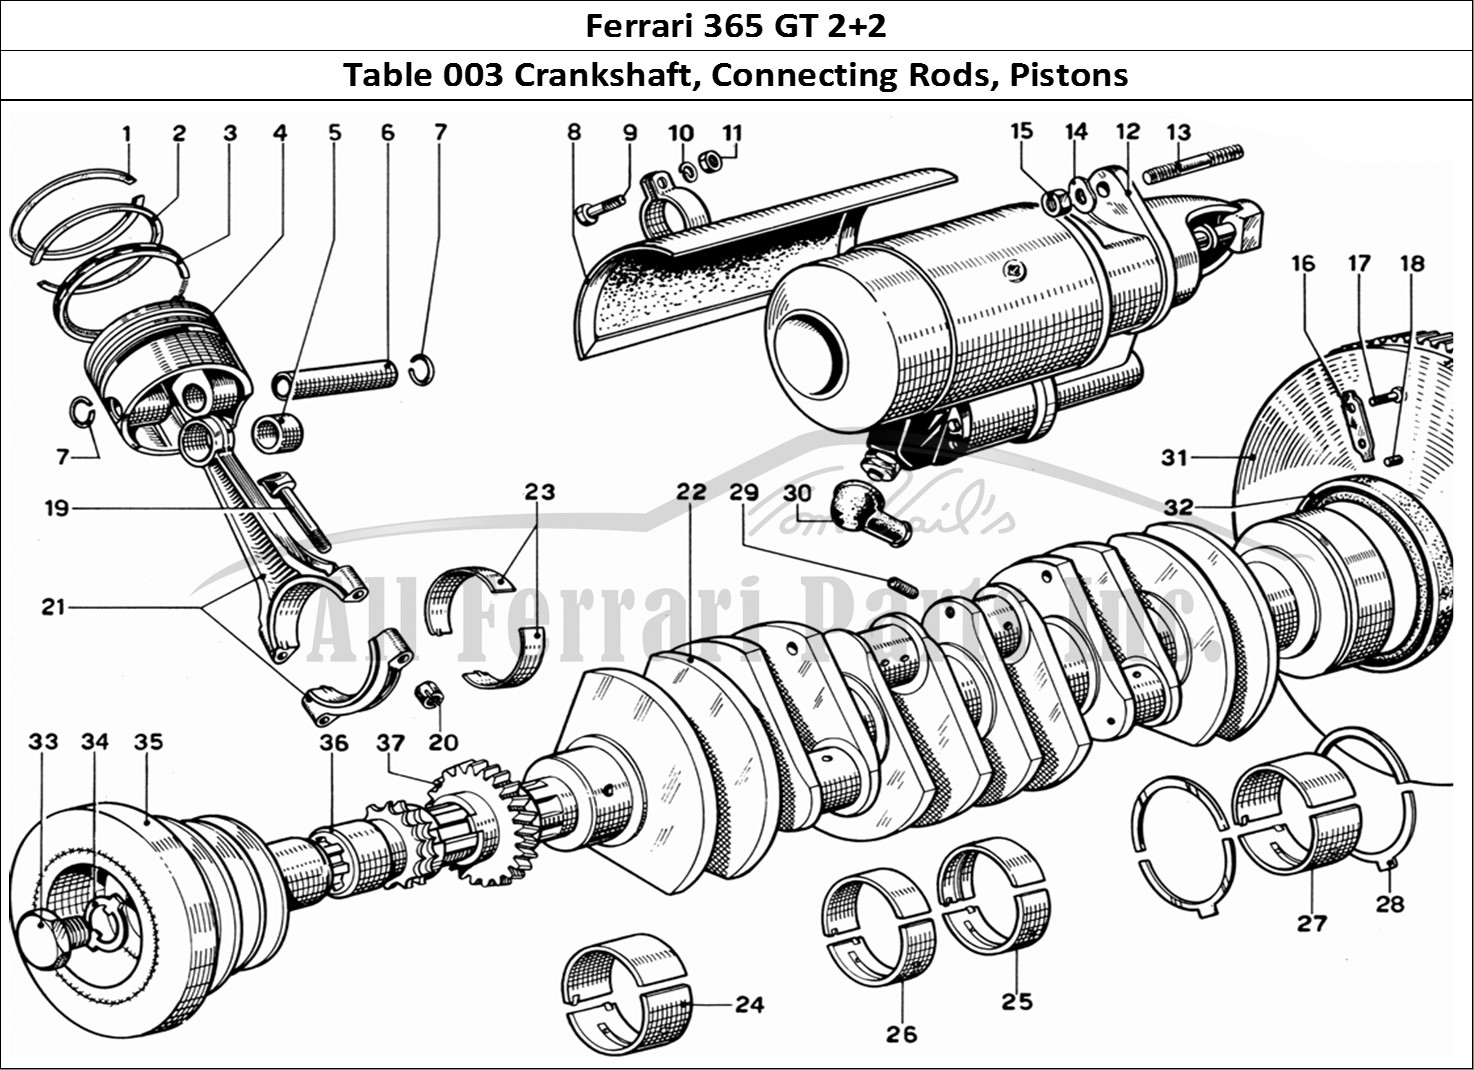 Ferrari Parts Ferrari 365 GT 2+2 (Mechanical) Page 003 Crankshaft, Connecting Ro